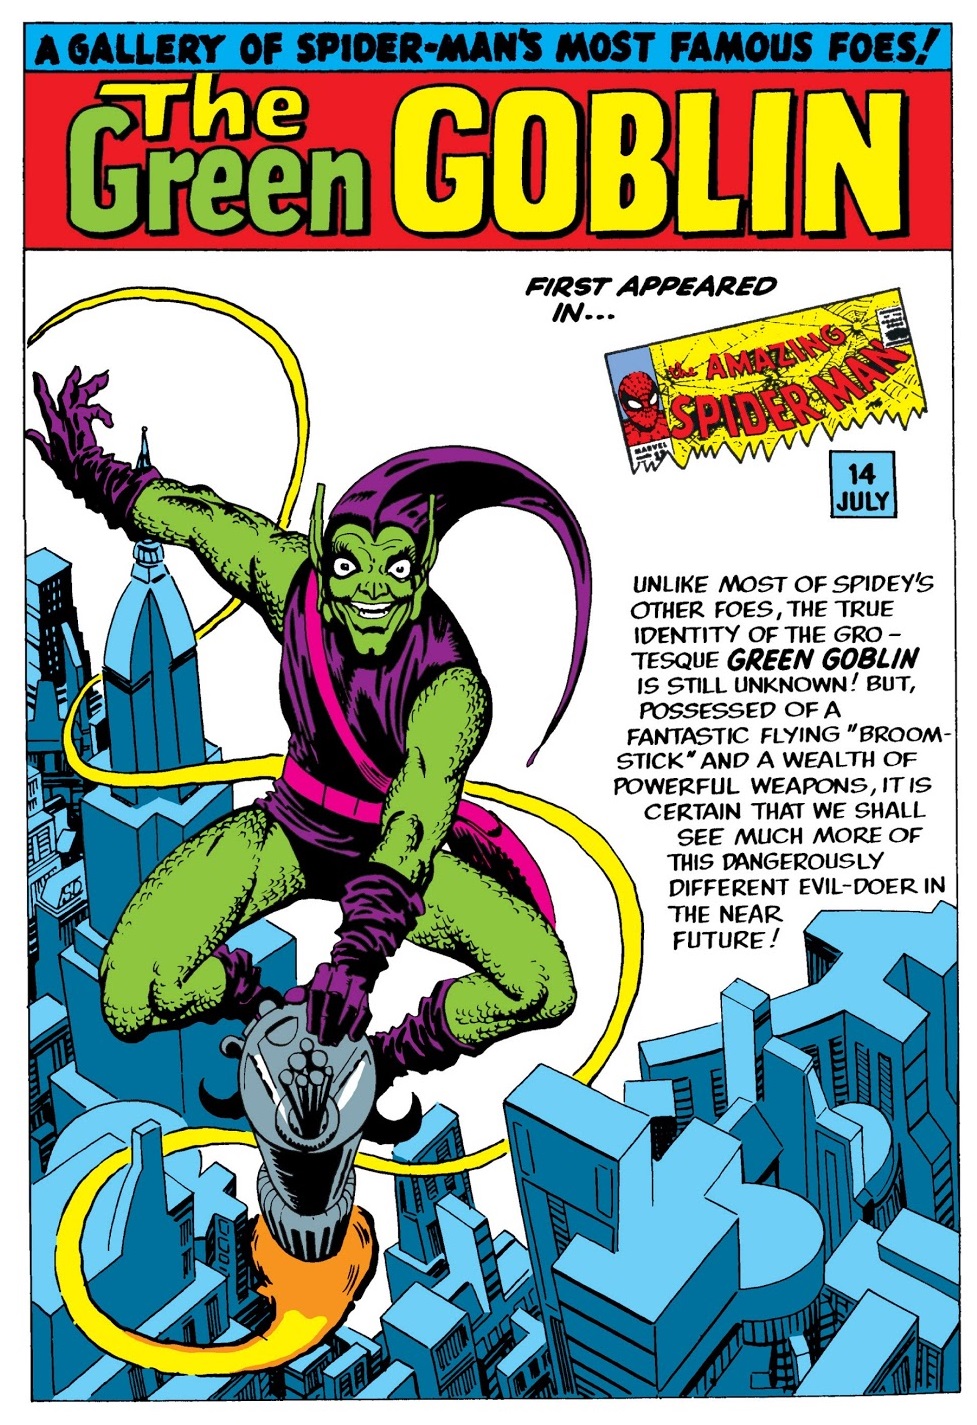 Do ya'll think Norman Osborn/ Green Goblin was comic accurate in